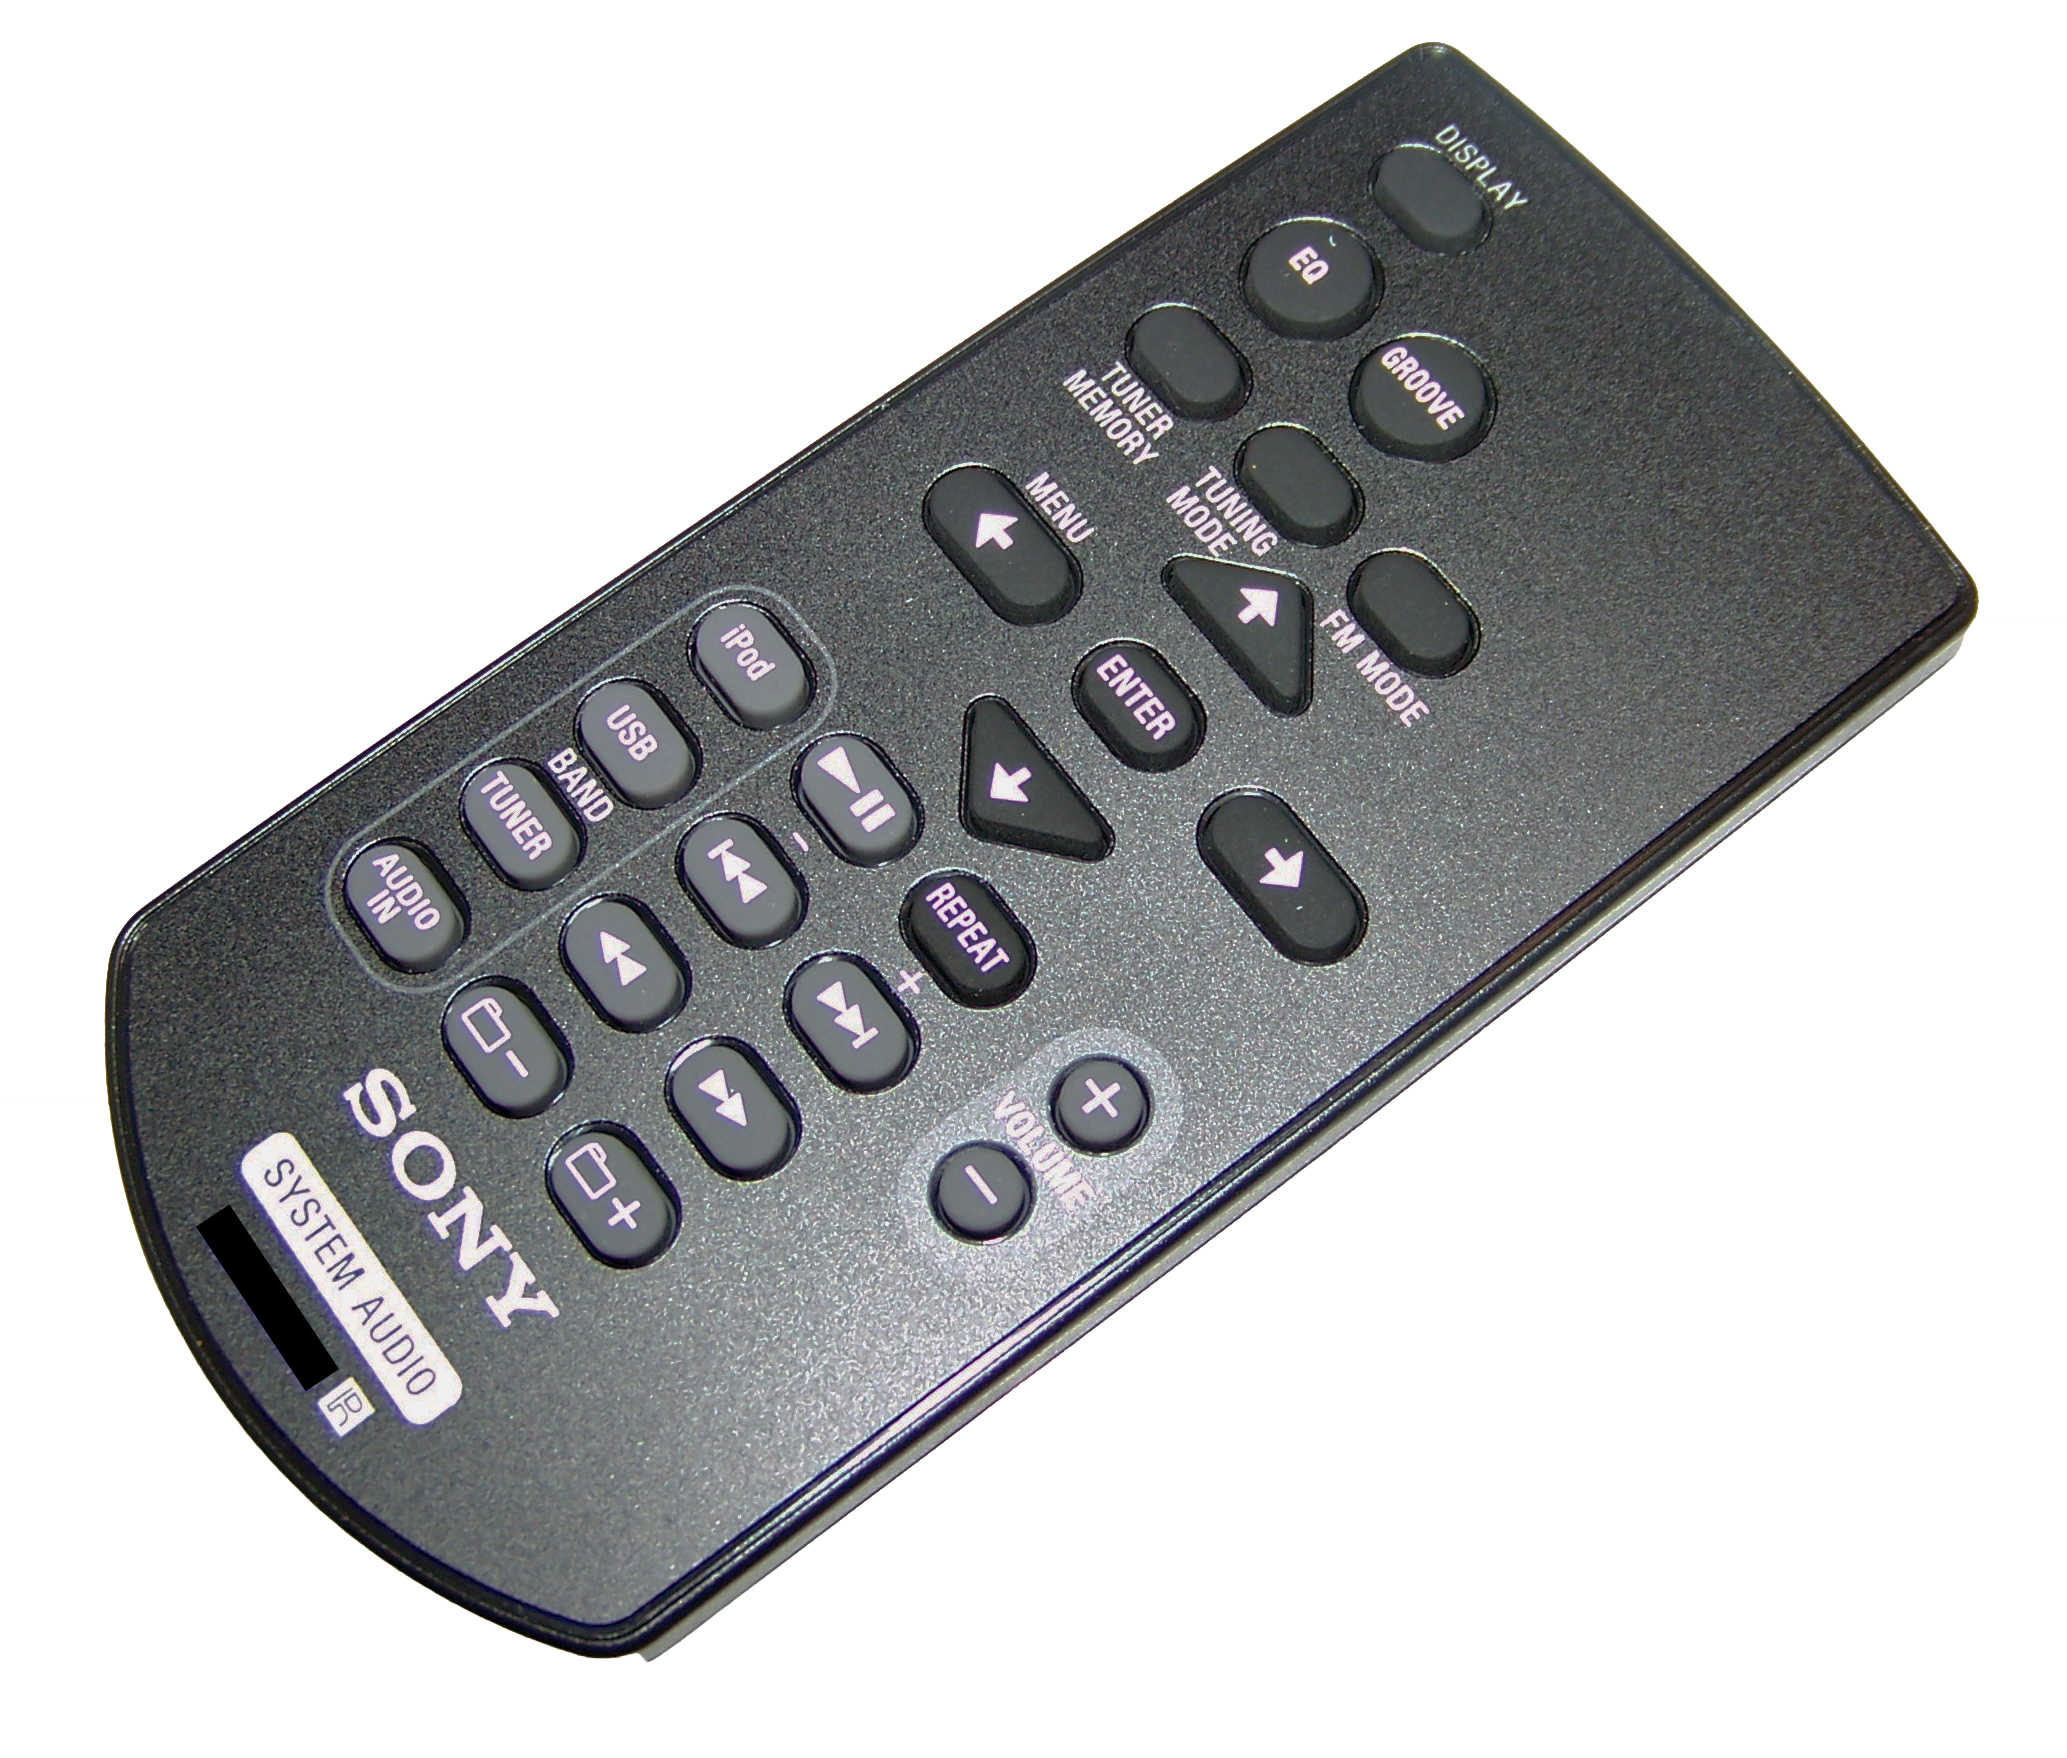 OEM Sony Remote Control Originally Shipped With: FSTGTK1i, FST-GTK1i, HCDGTK1i, HCD-GTK1i, RDHGTK1i, RDH-GTK1i